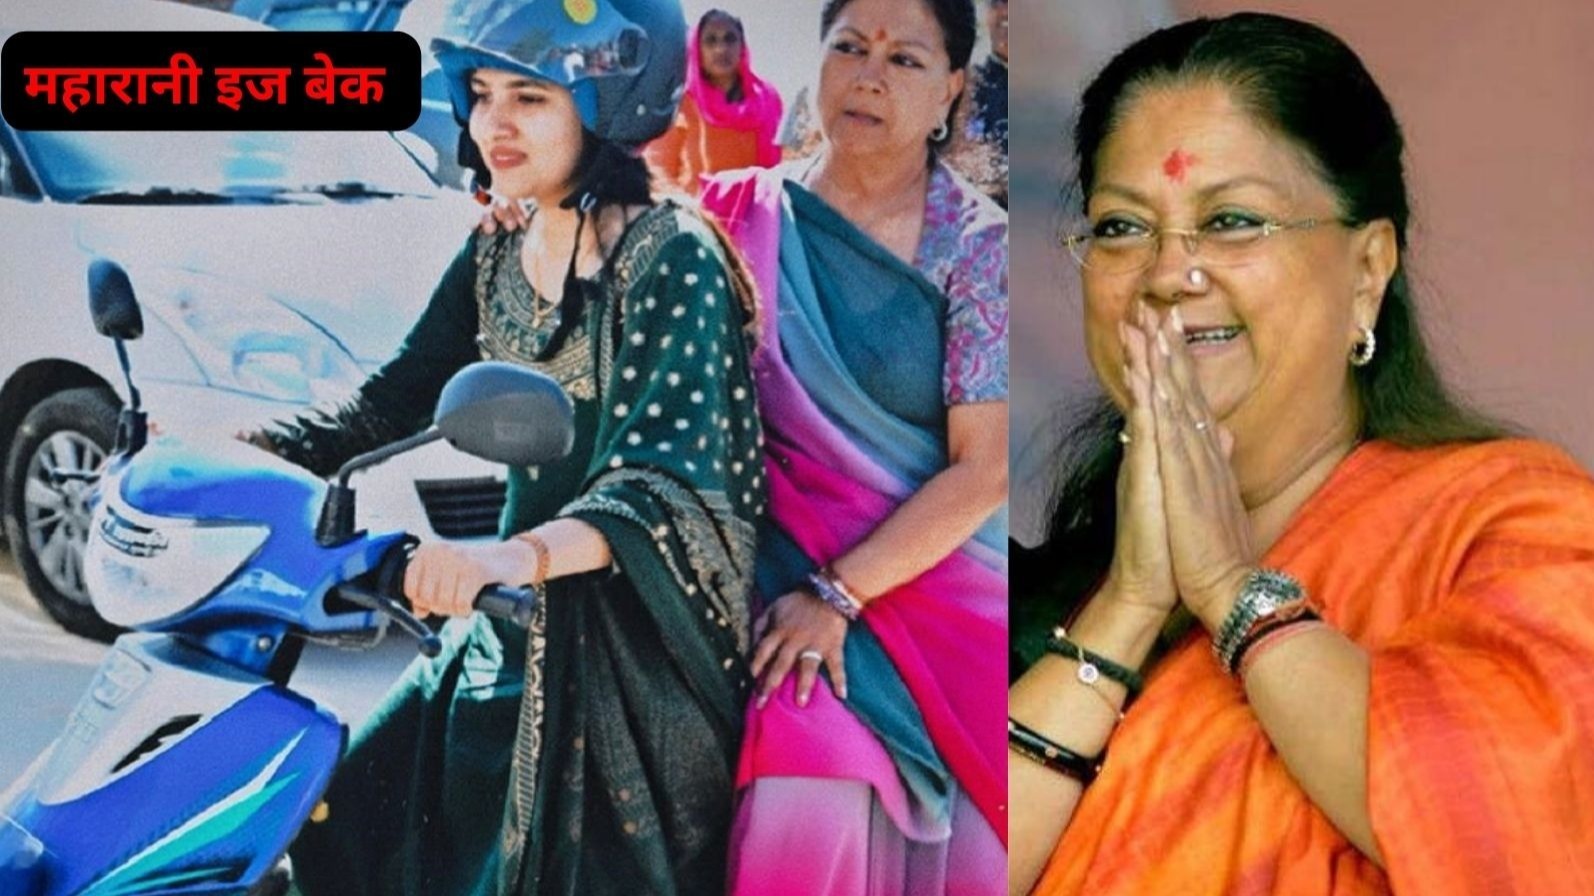 राजस्थान के राजनितिक रण में फिर लौटी महारानी वसुंधरा राजे